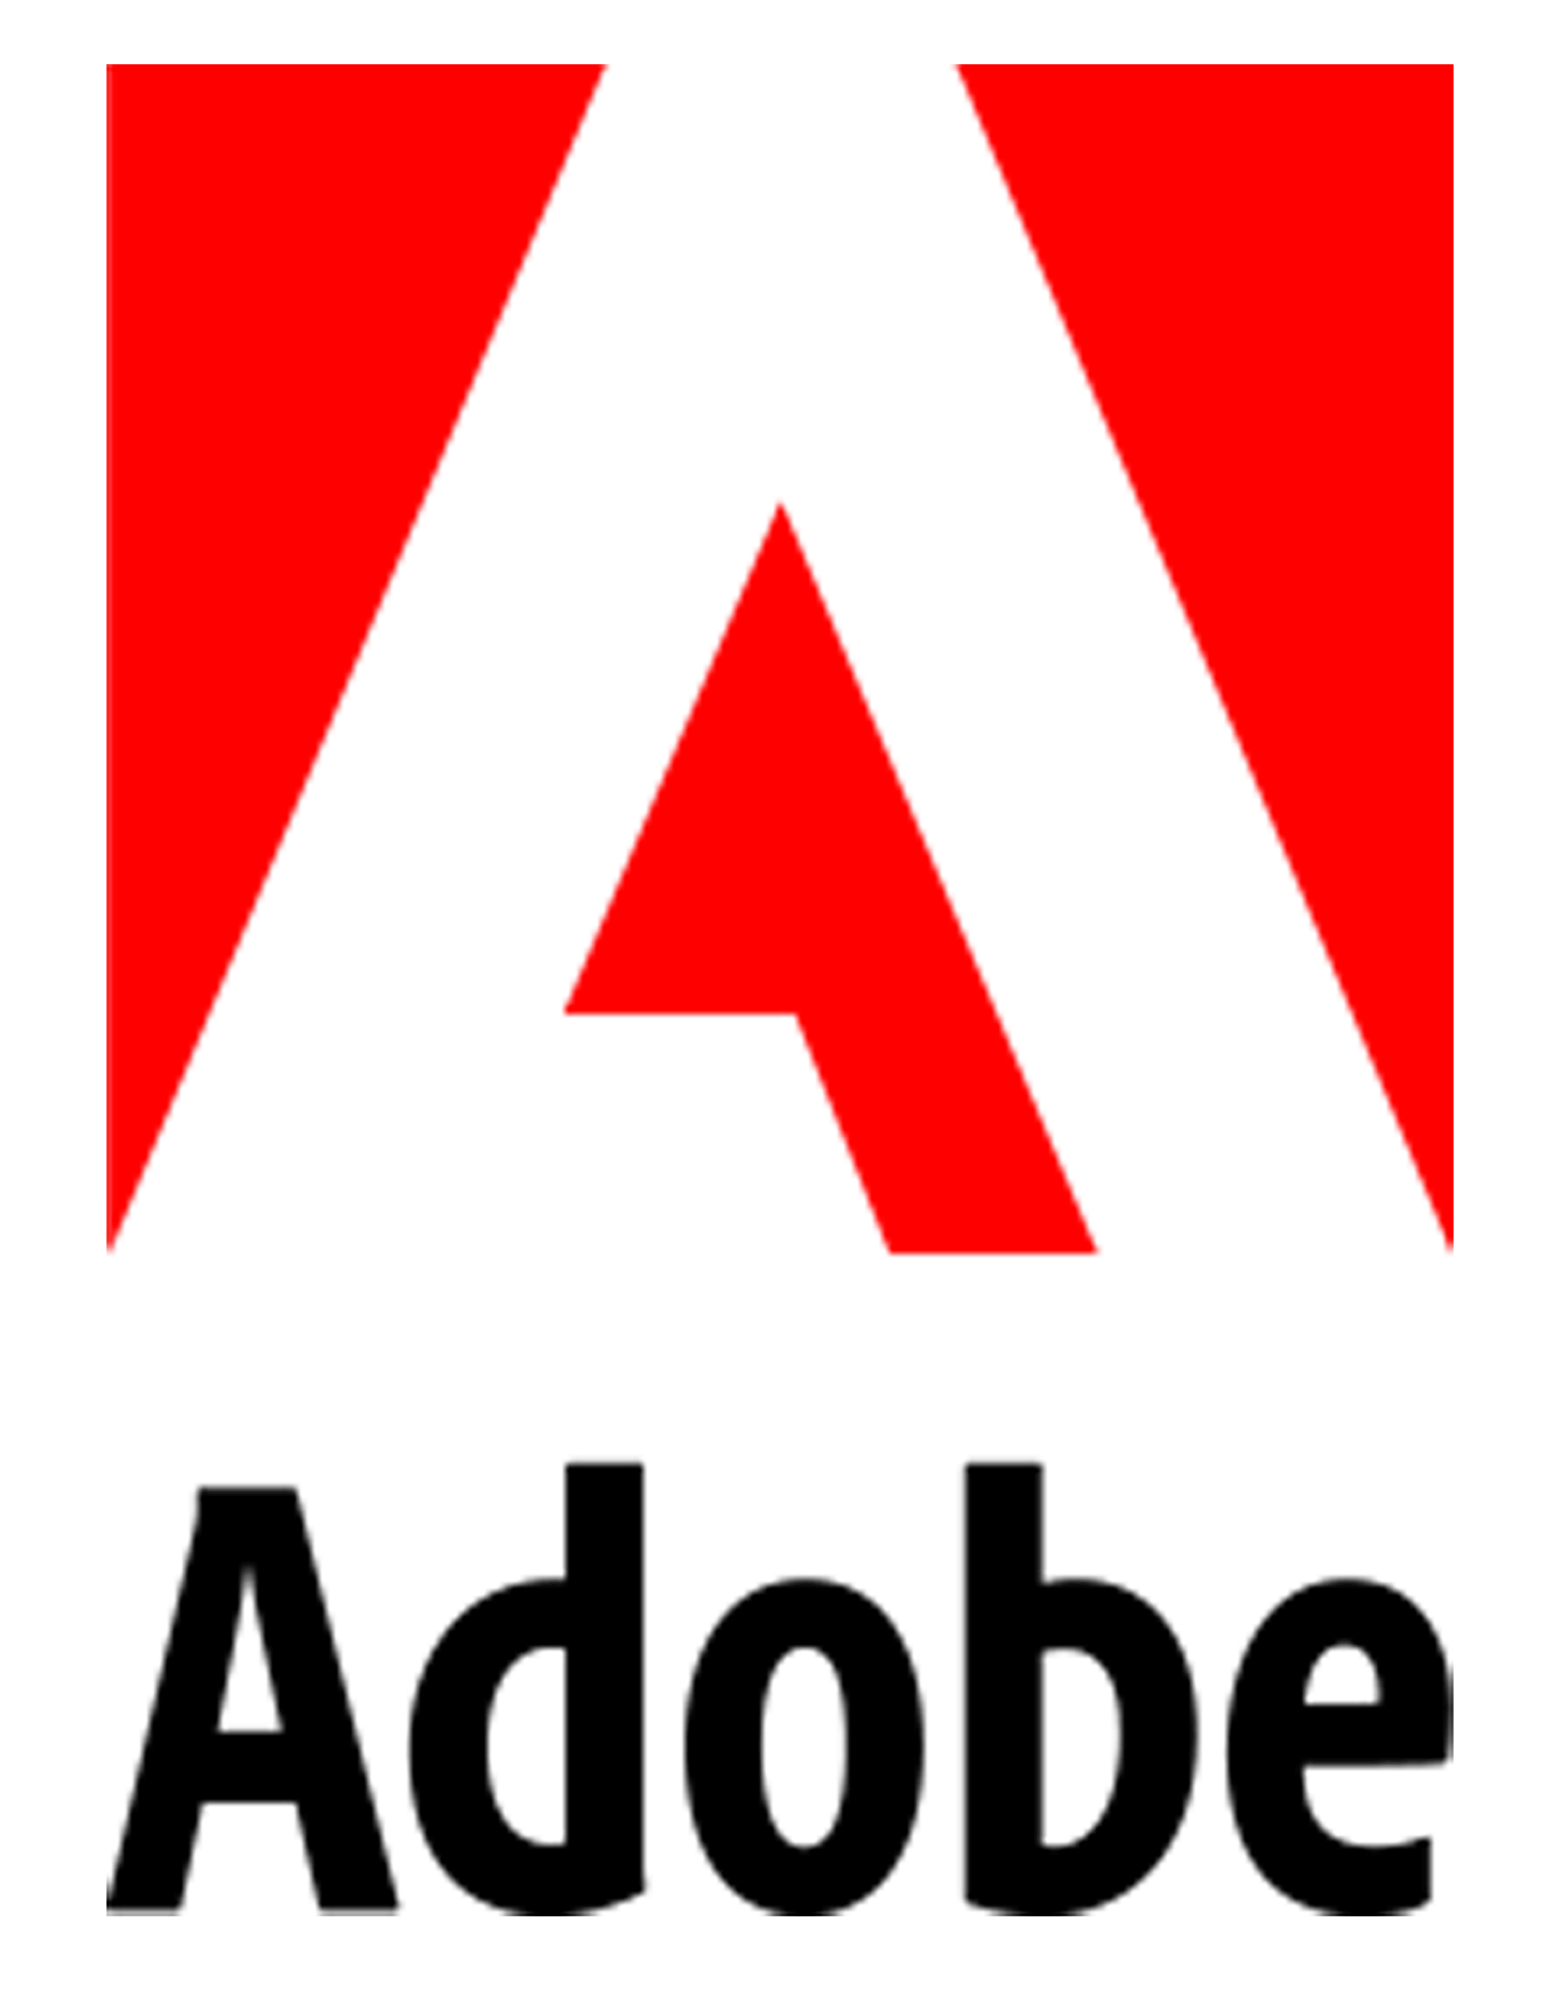  Adobe 